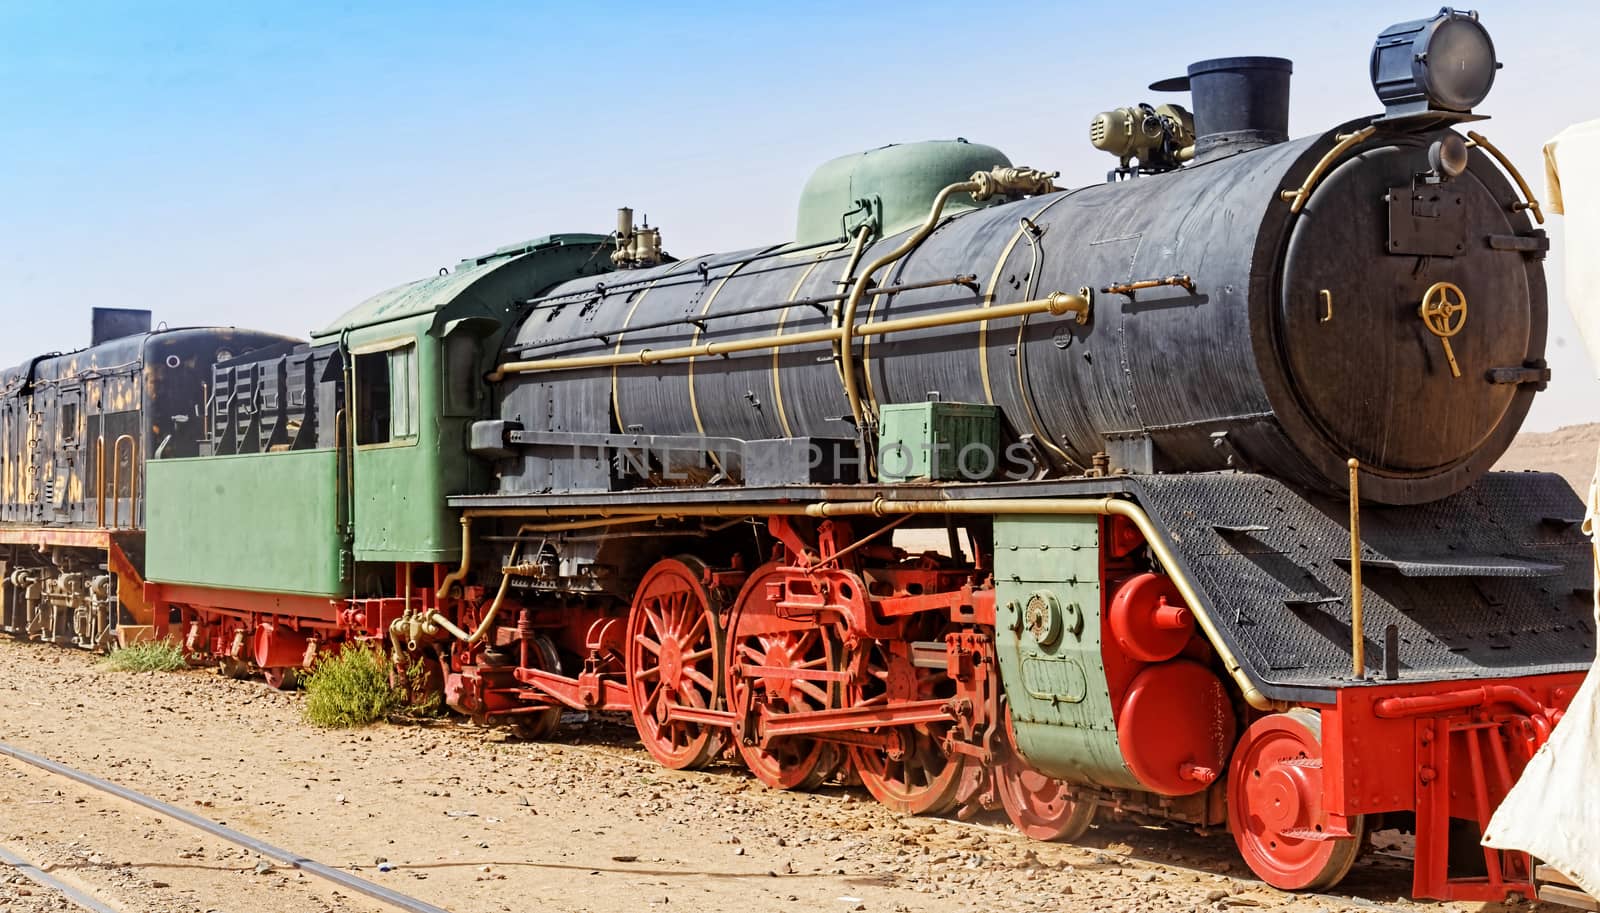 Steam locomotive, still in use, in the desert of Wadi Rum, Jordan by geogif